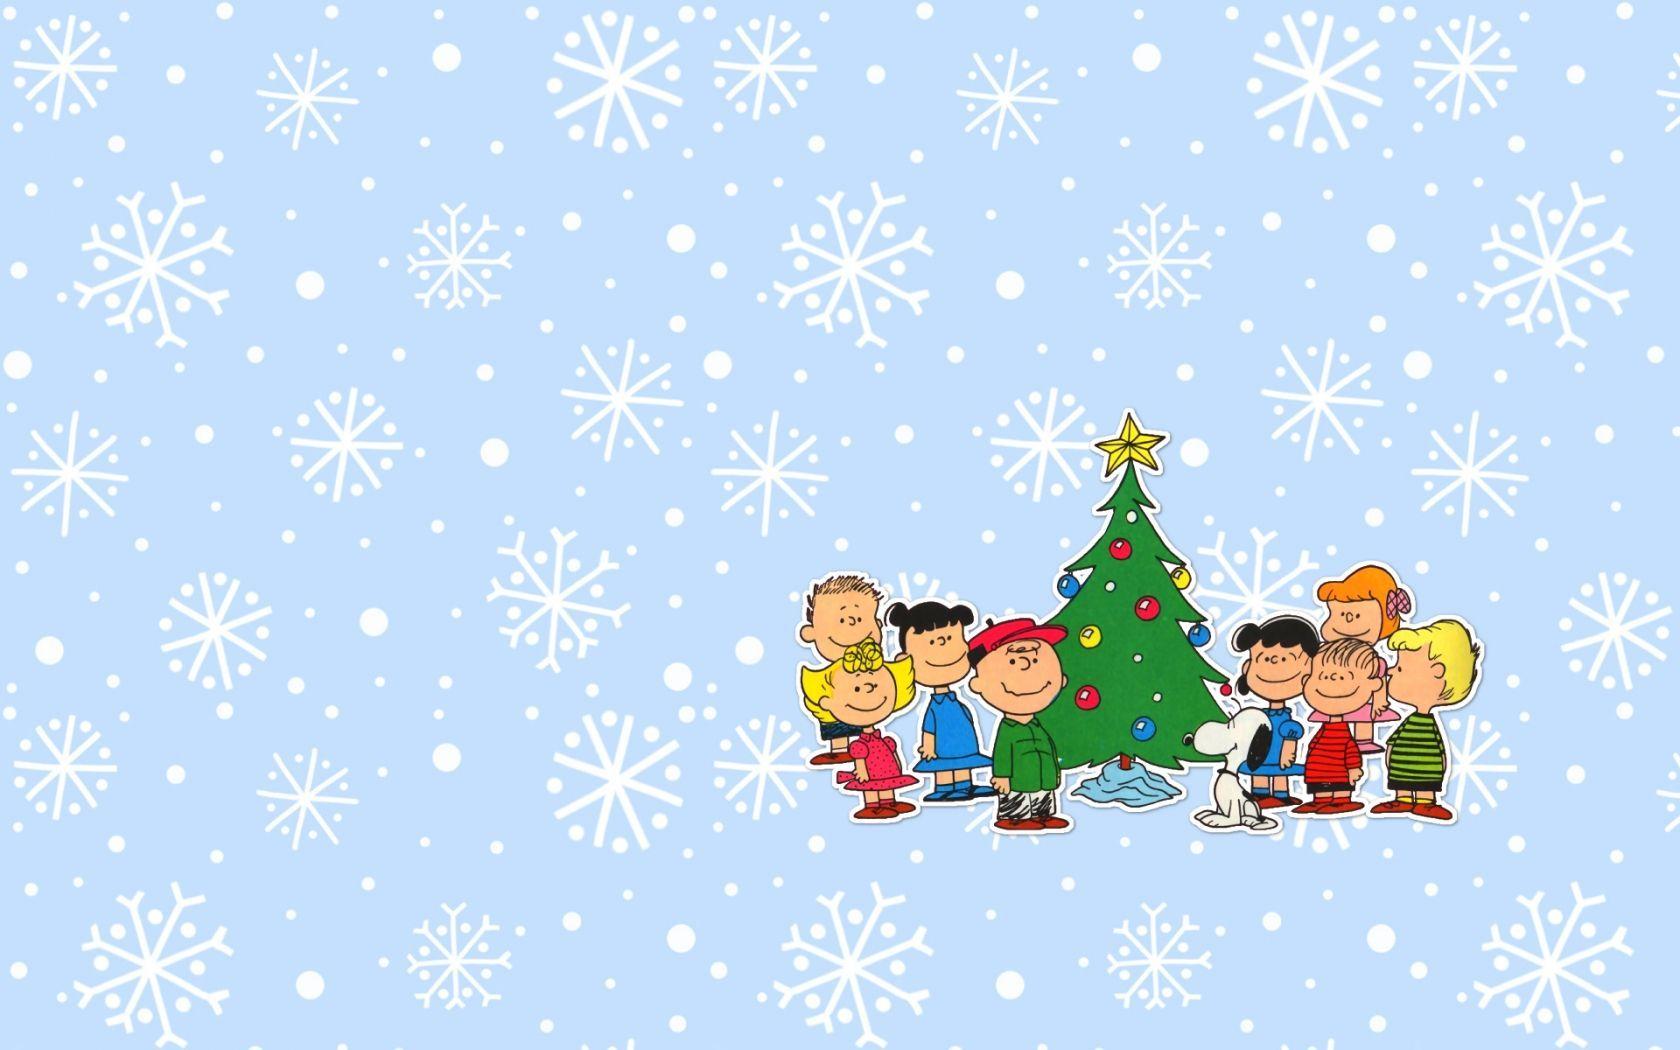 Charlie Brown Christmas Wallpaper Background. Christmas